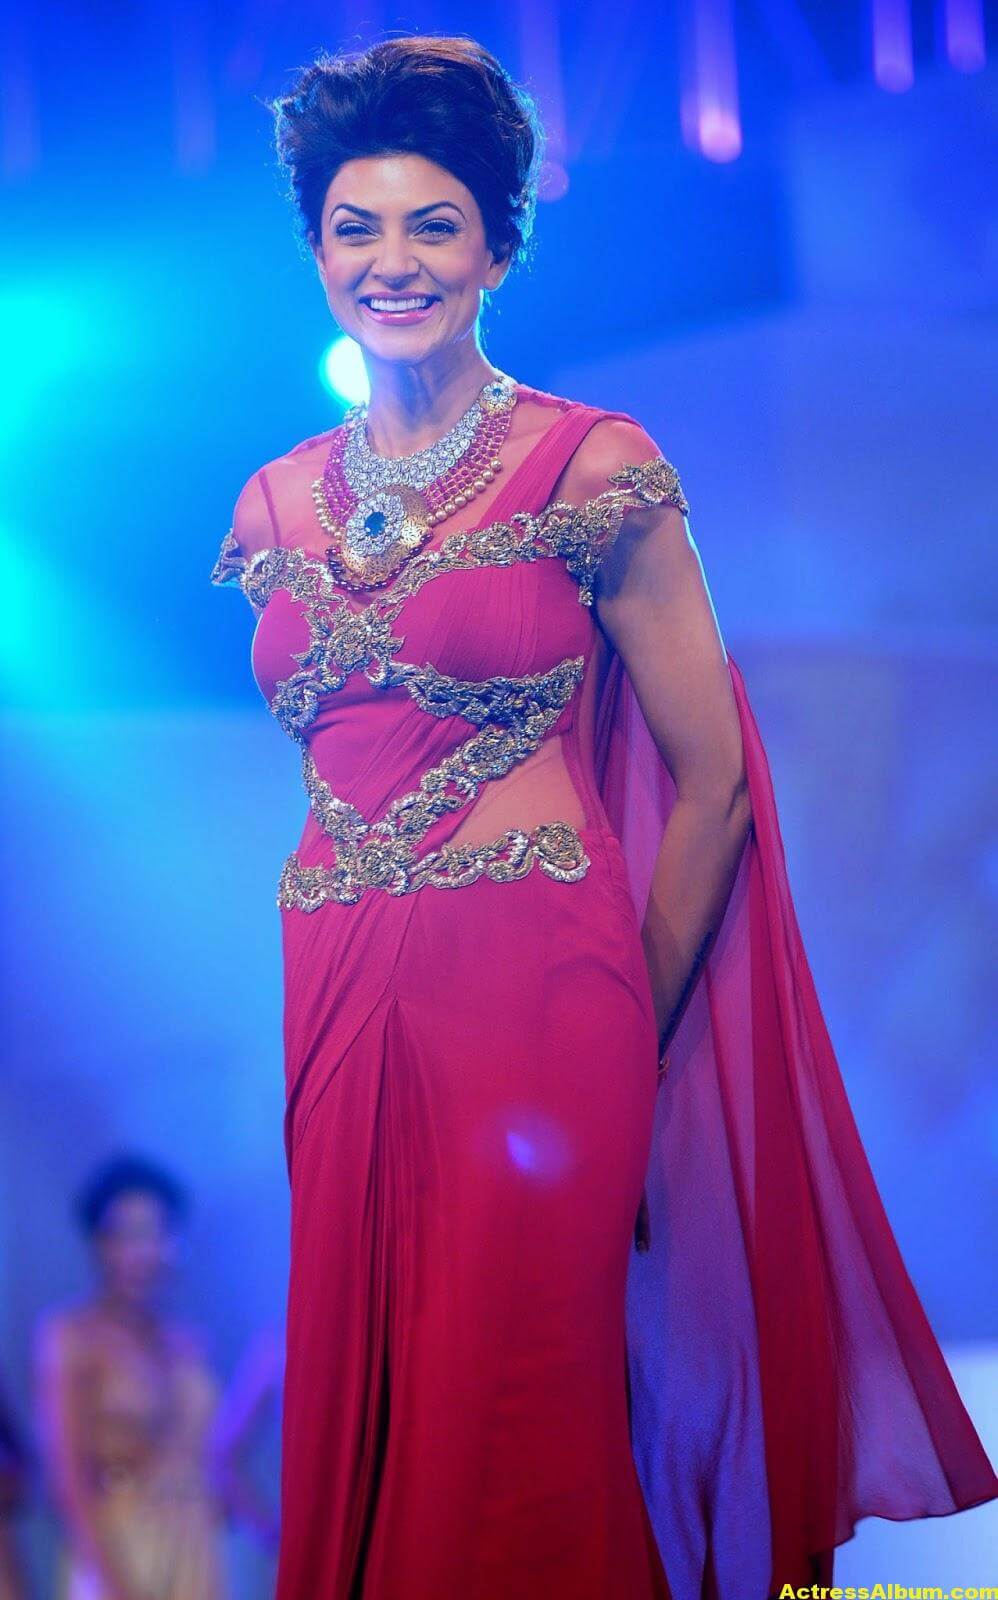 Sushmita Sen Hot Photos In Red Saree Actress Album